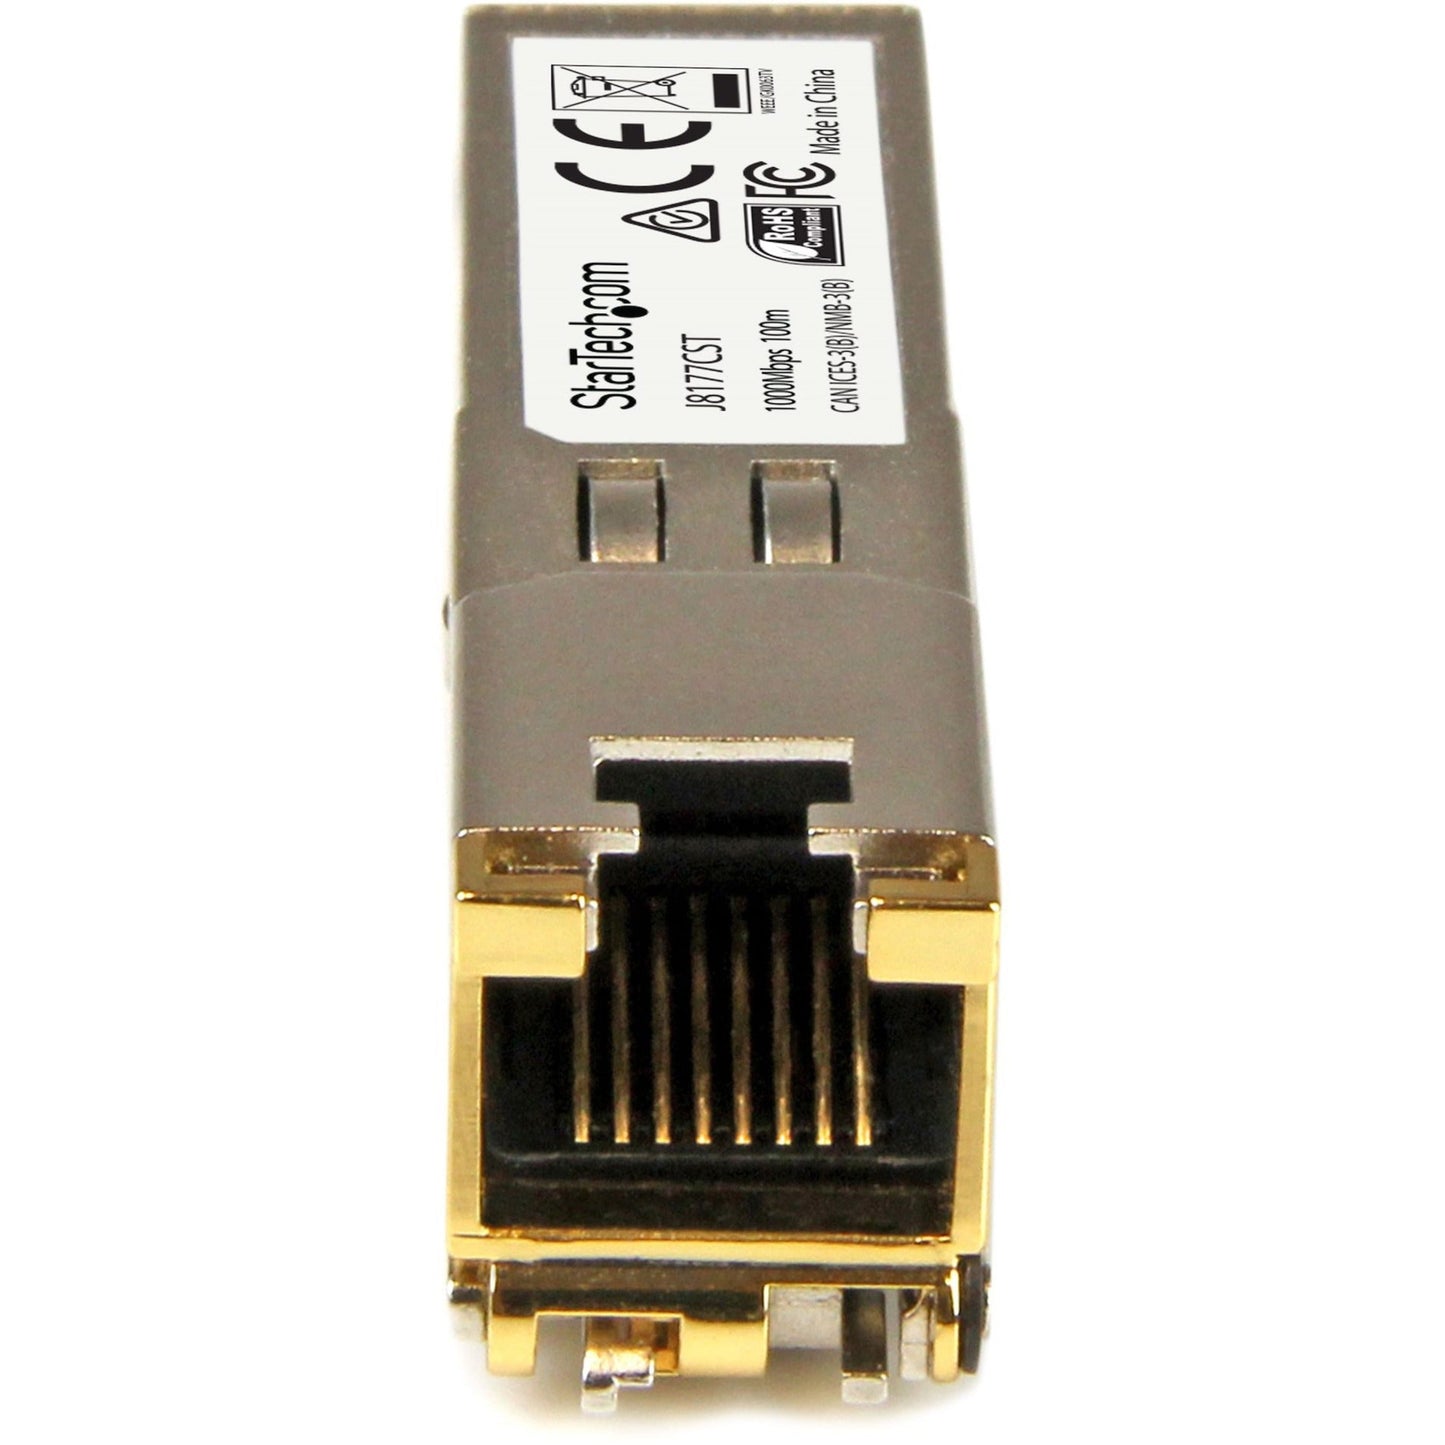 StarTech.com HPE J8177C Compatible SFP Module - 1000BASE-T - 1GE Gigabit Ethernet SFP SFP to RJ45 Cat6/Cat5e - 100m